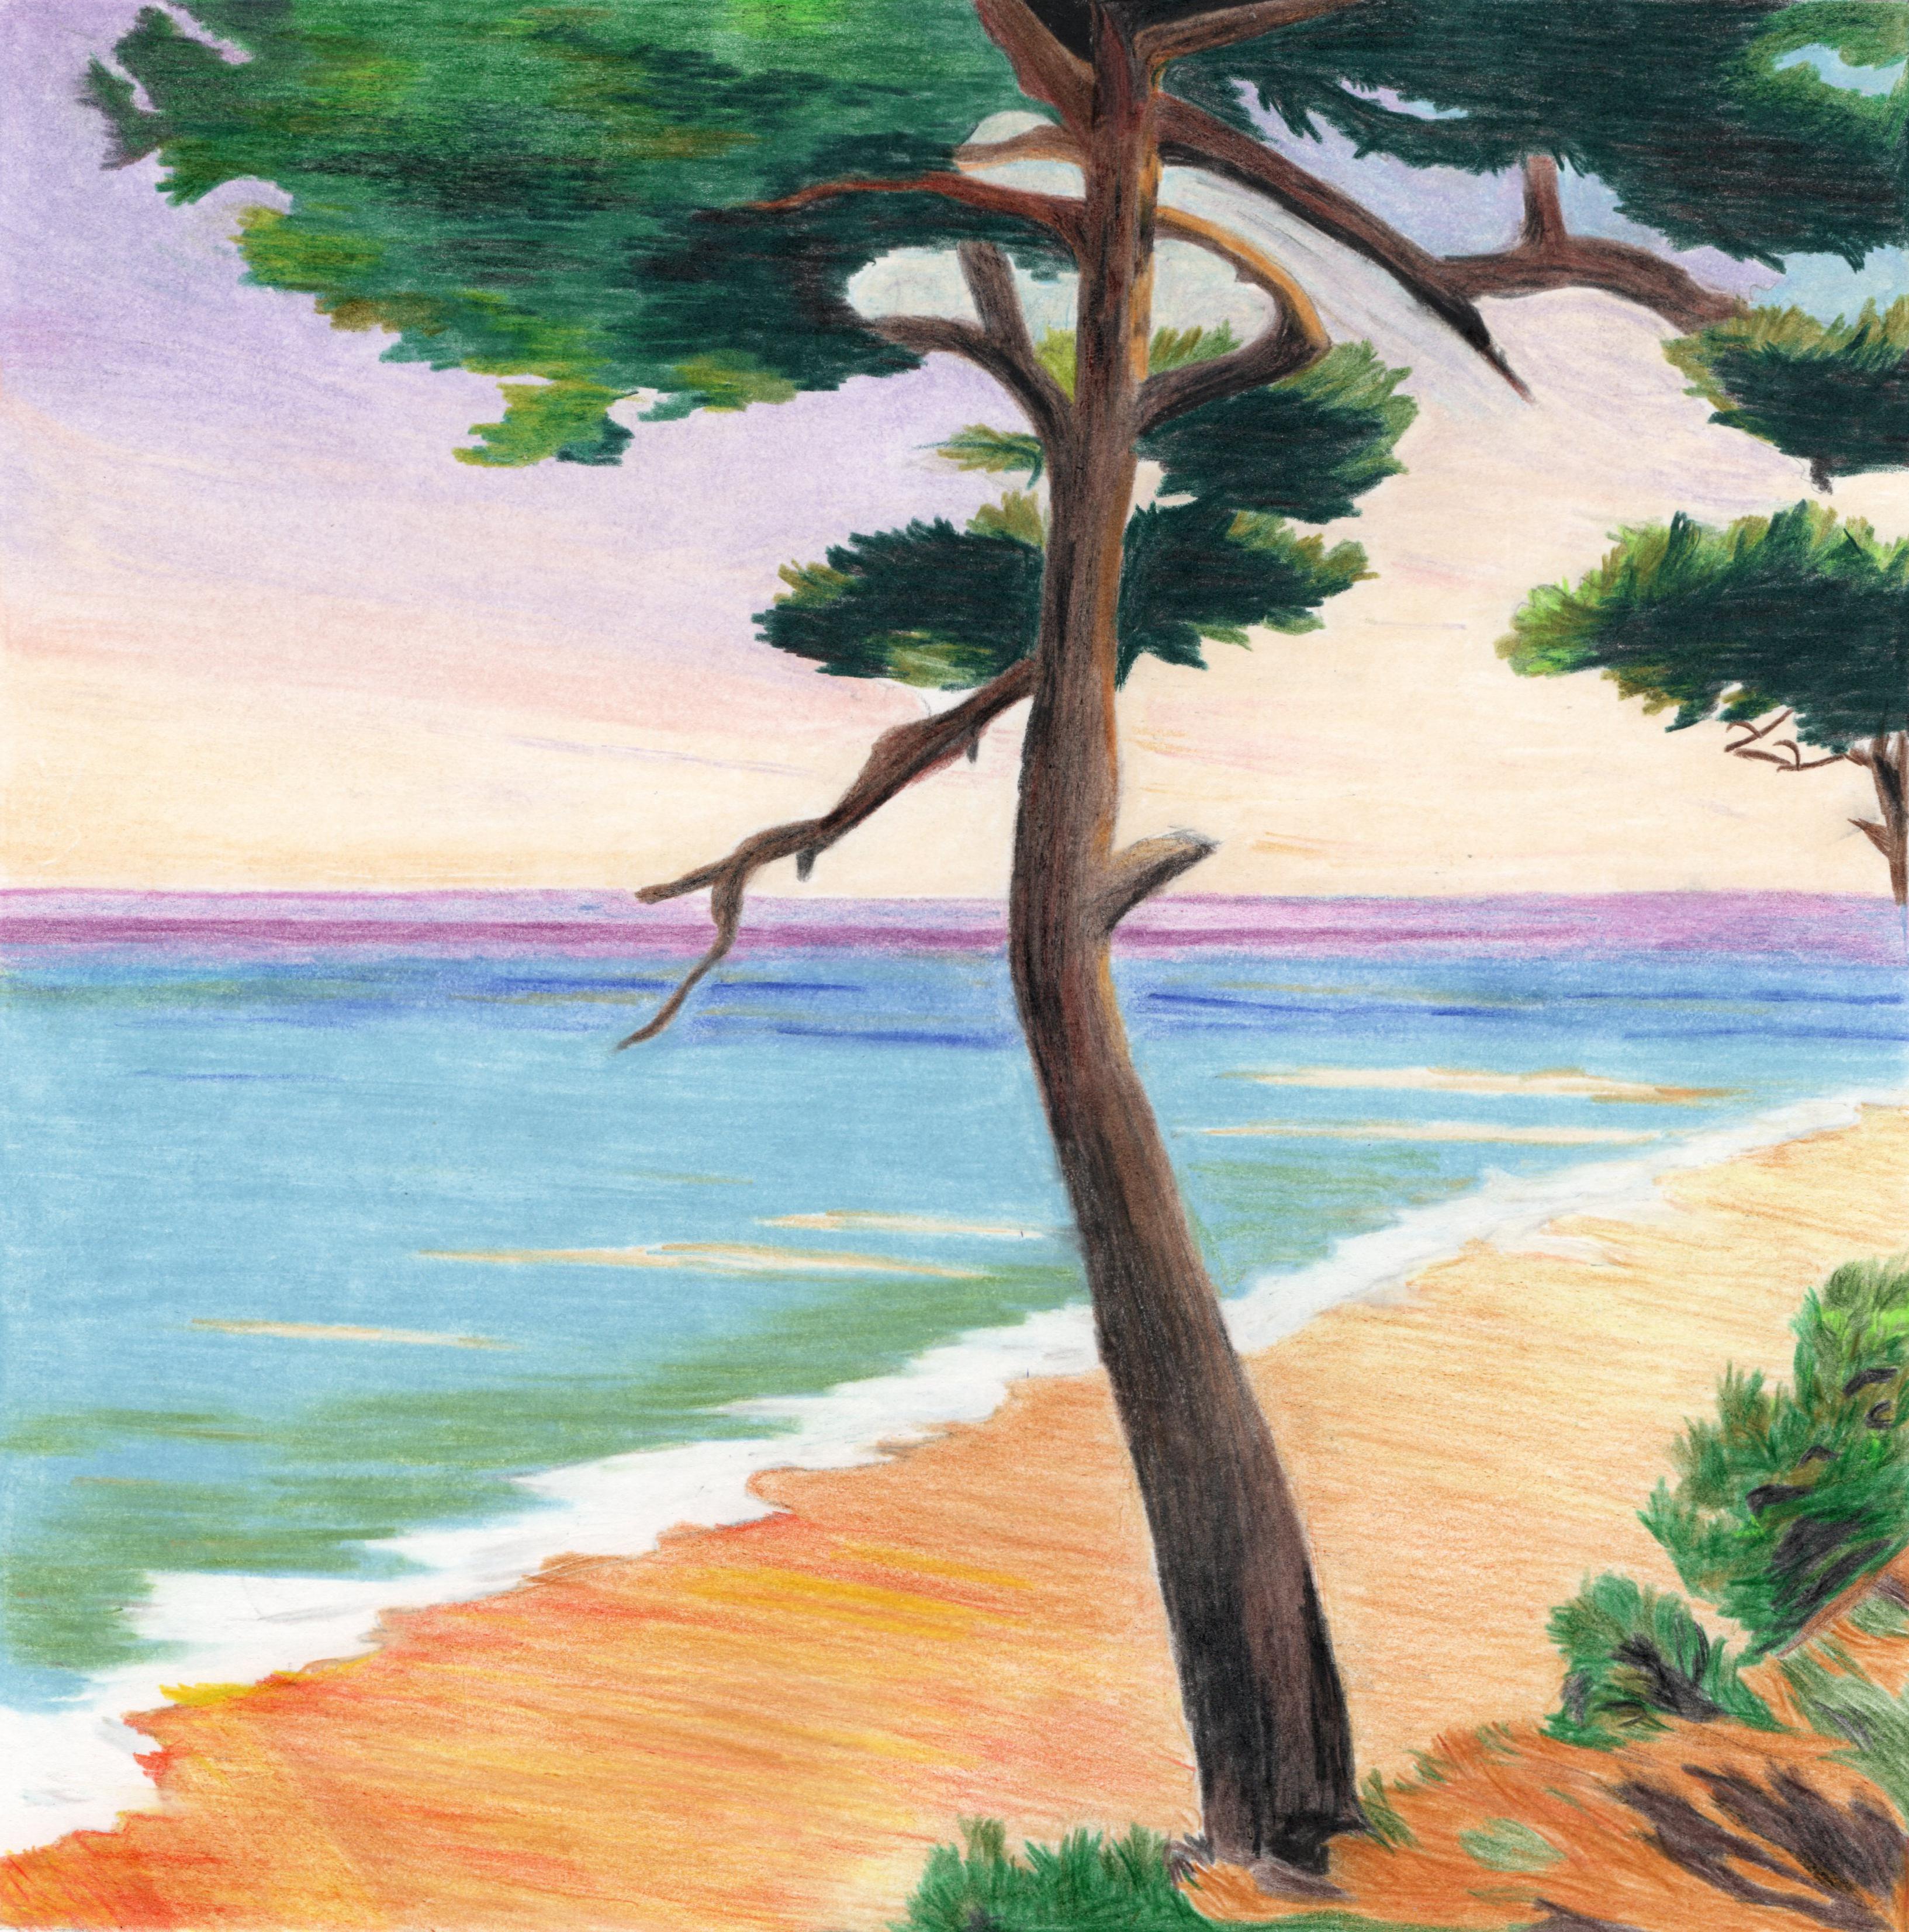 Gabriel Riesnert Landscape Art - La plage, Original Drawing, Pastel, Seascape, Tree along the seafront